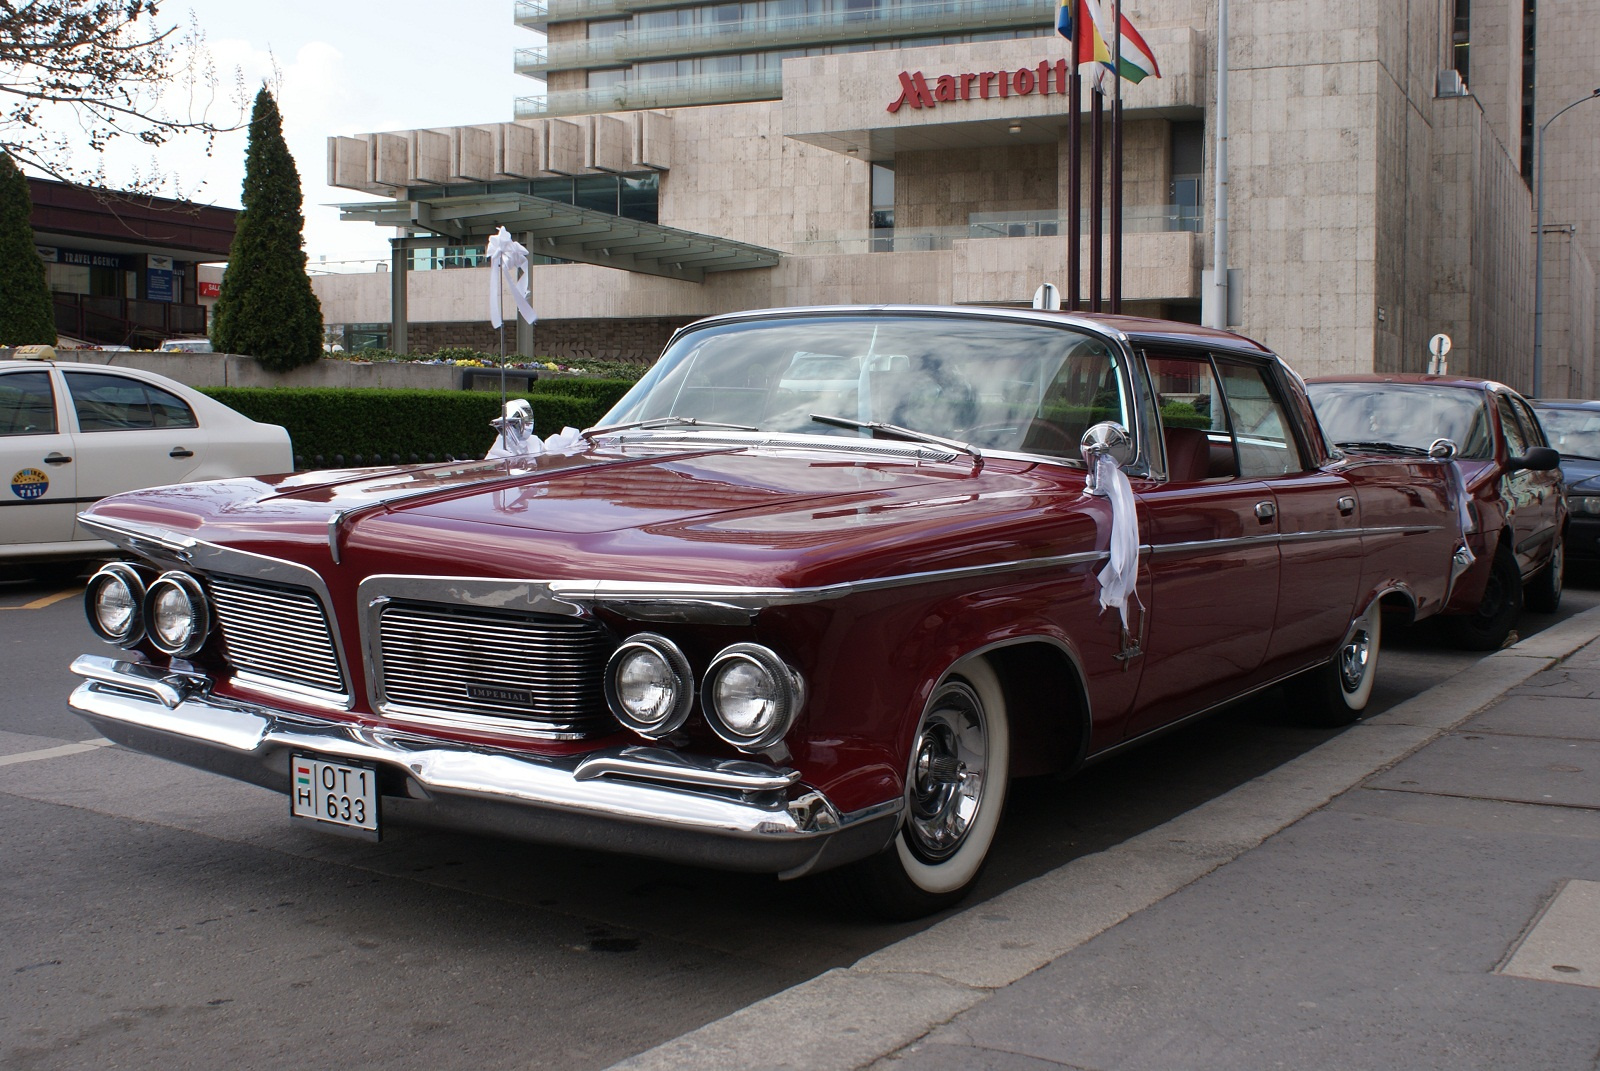 Chrysler Imperial Crown 1962